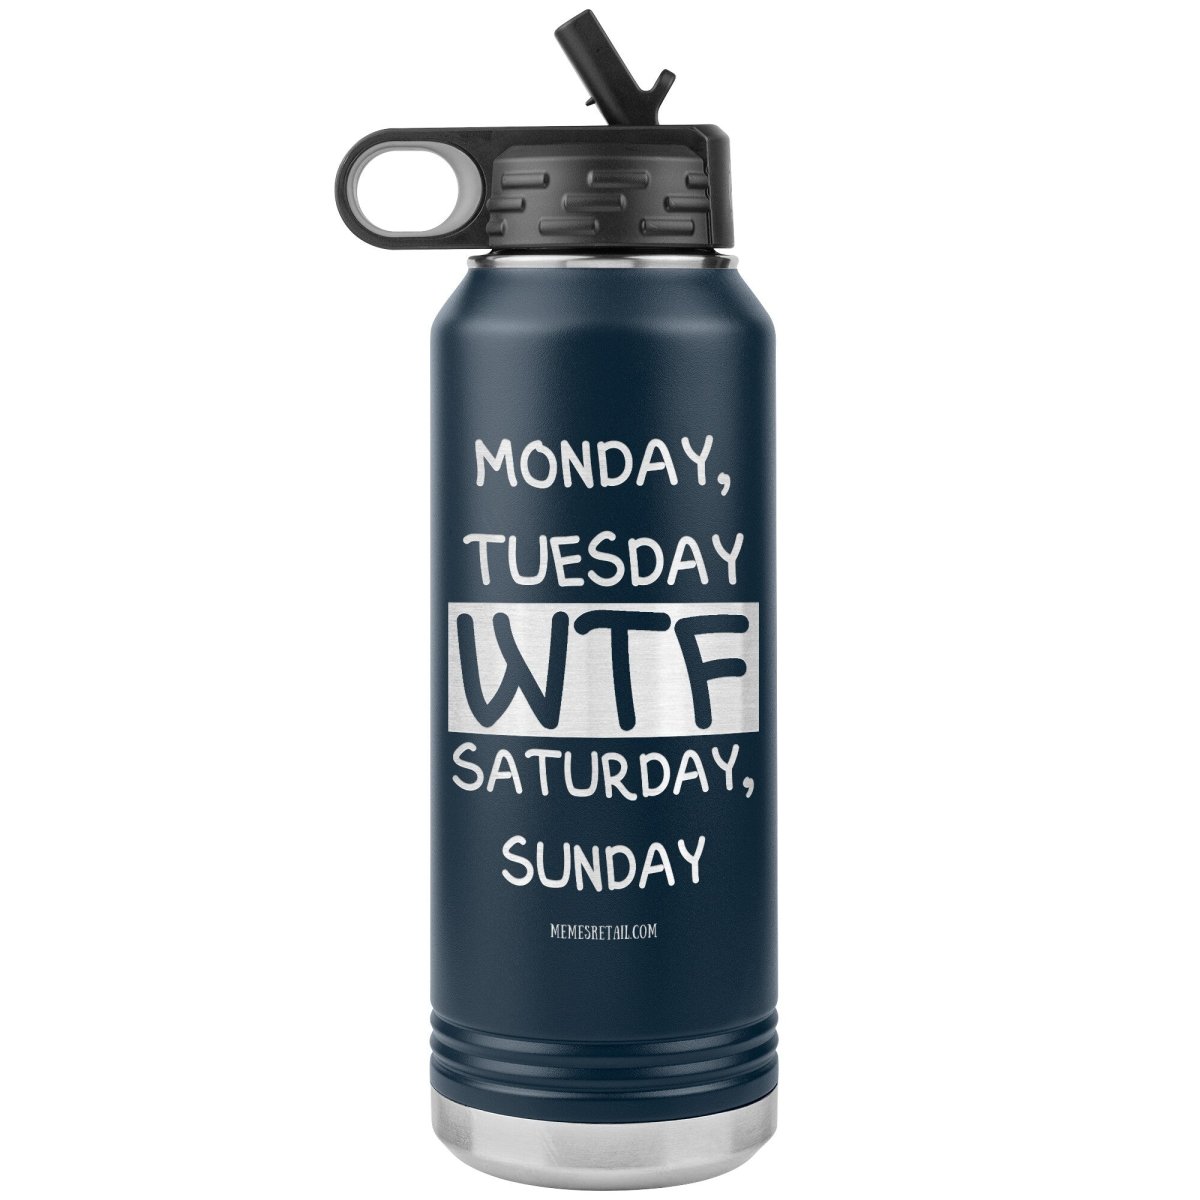 Monday, Tuesday, WTF, Saturday, Sunday 32 oz Water Tumbler, Navy - MemesRetail.com